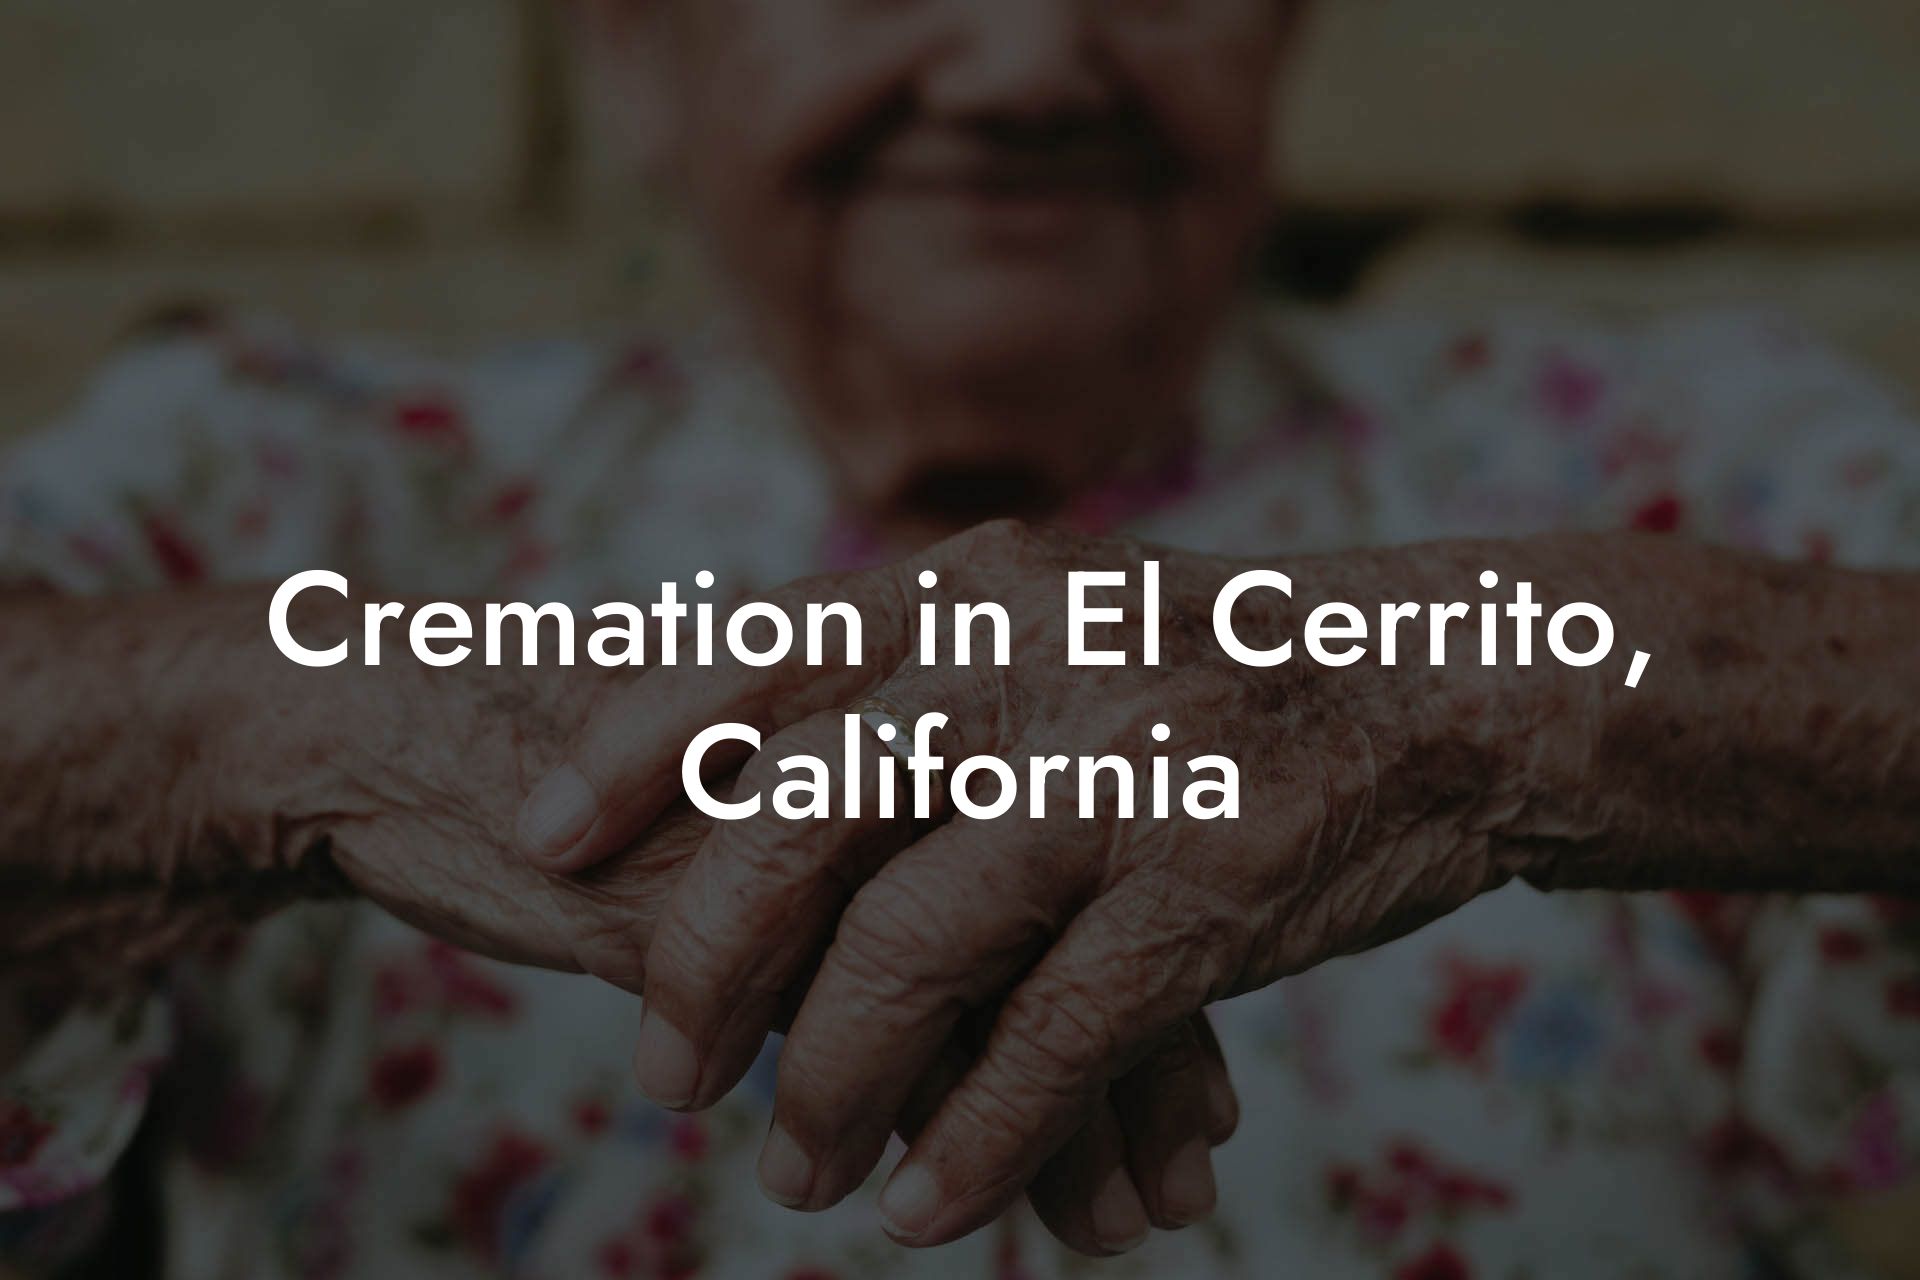 Cremation in El Cerrito, California